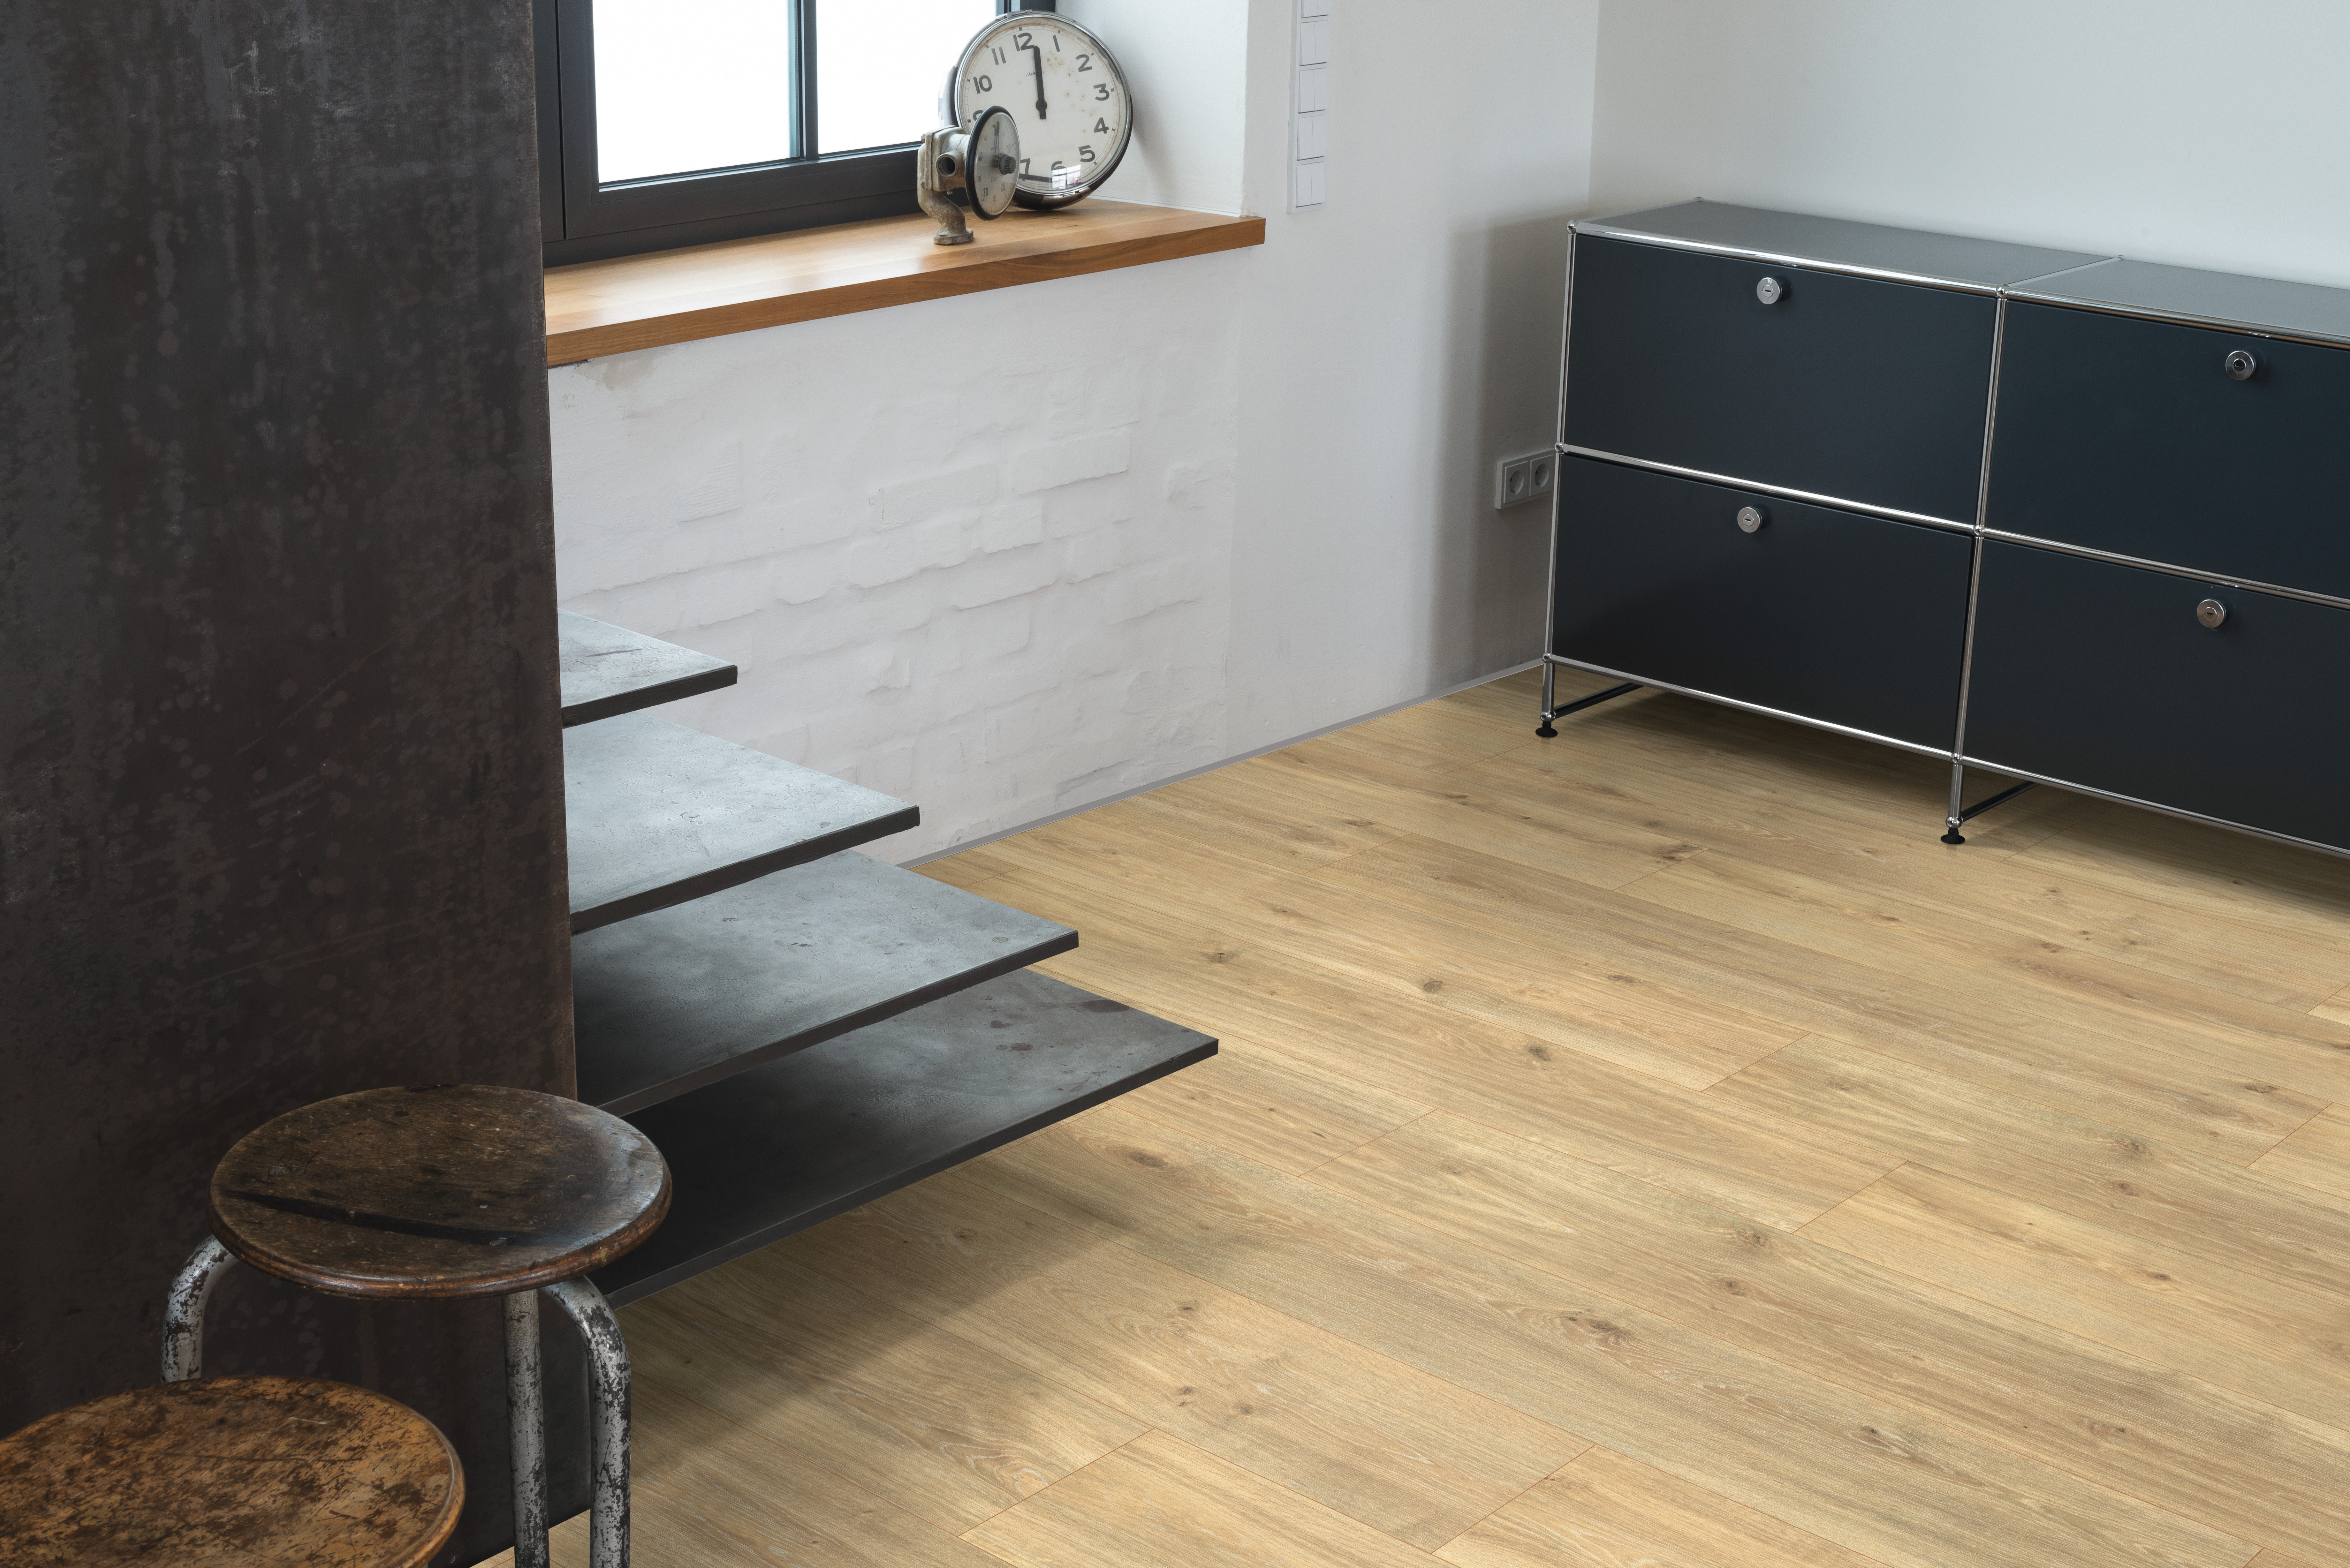 Authentic surfaces ensure attractive flooring